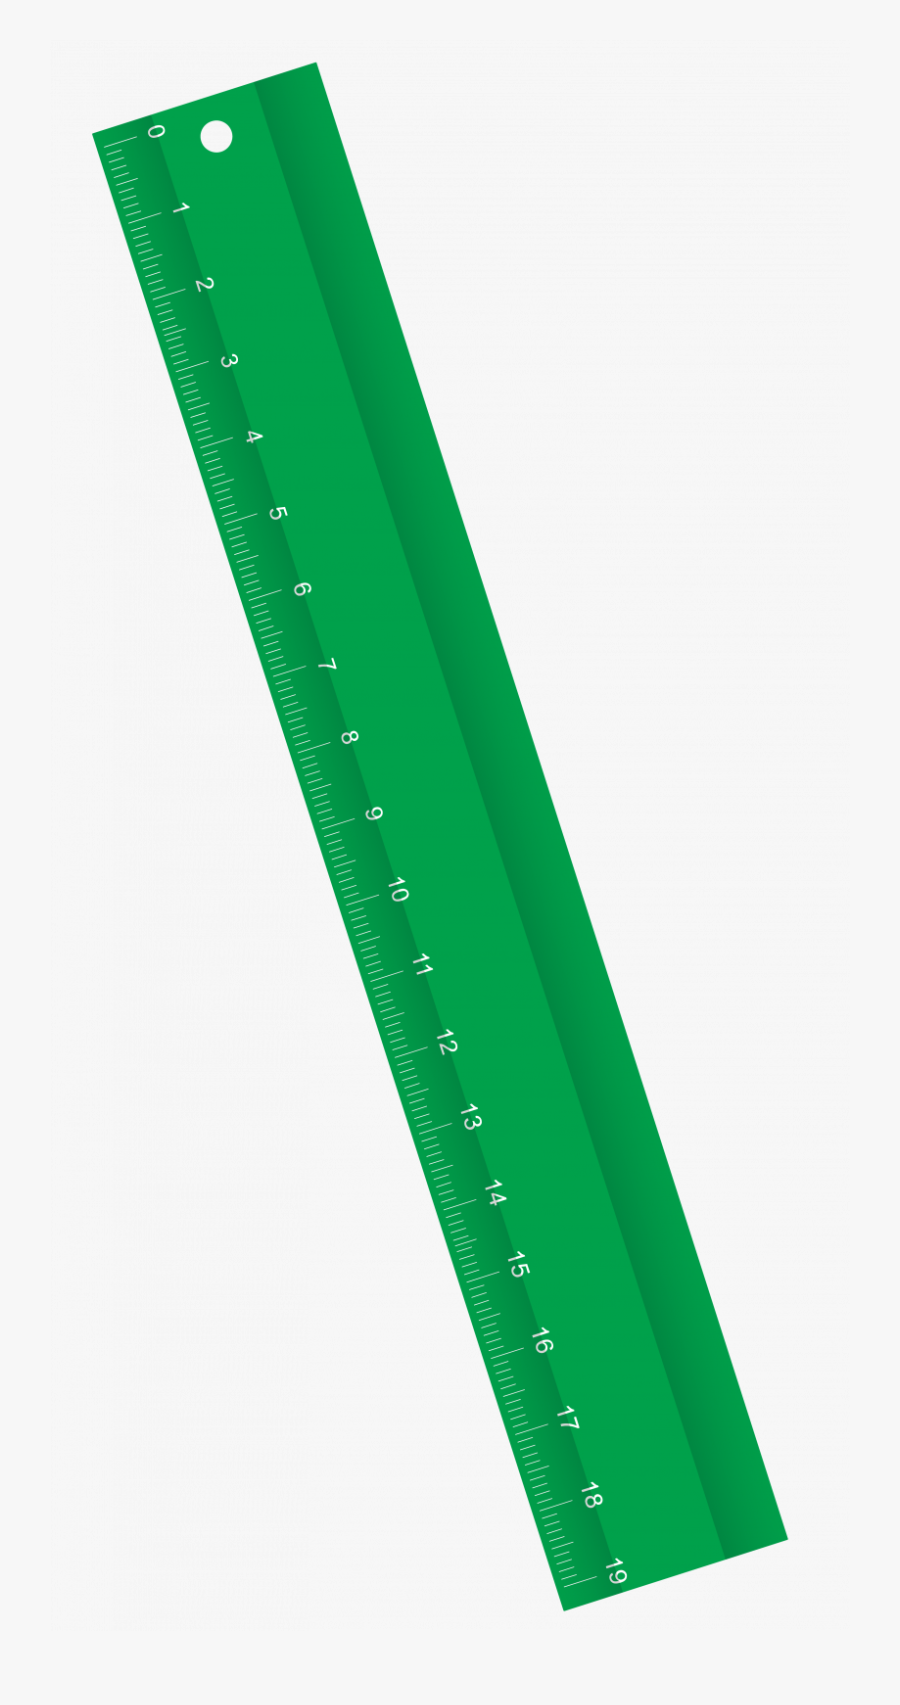 Green Png Image High - Green Ruler Transparent Background, Transparent Clipart